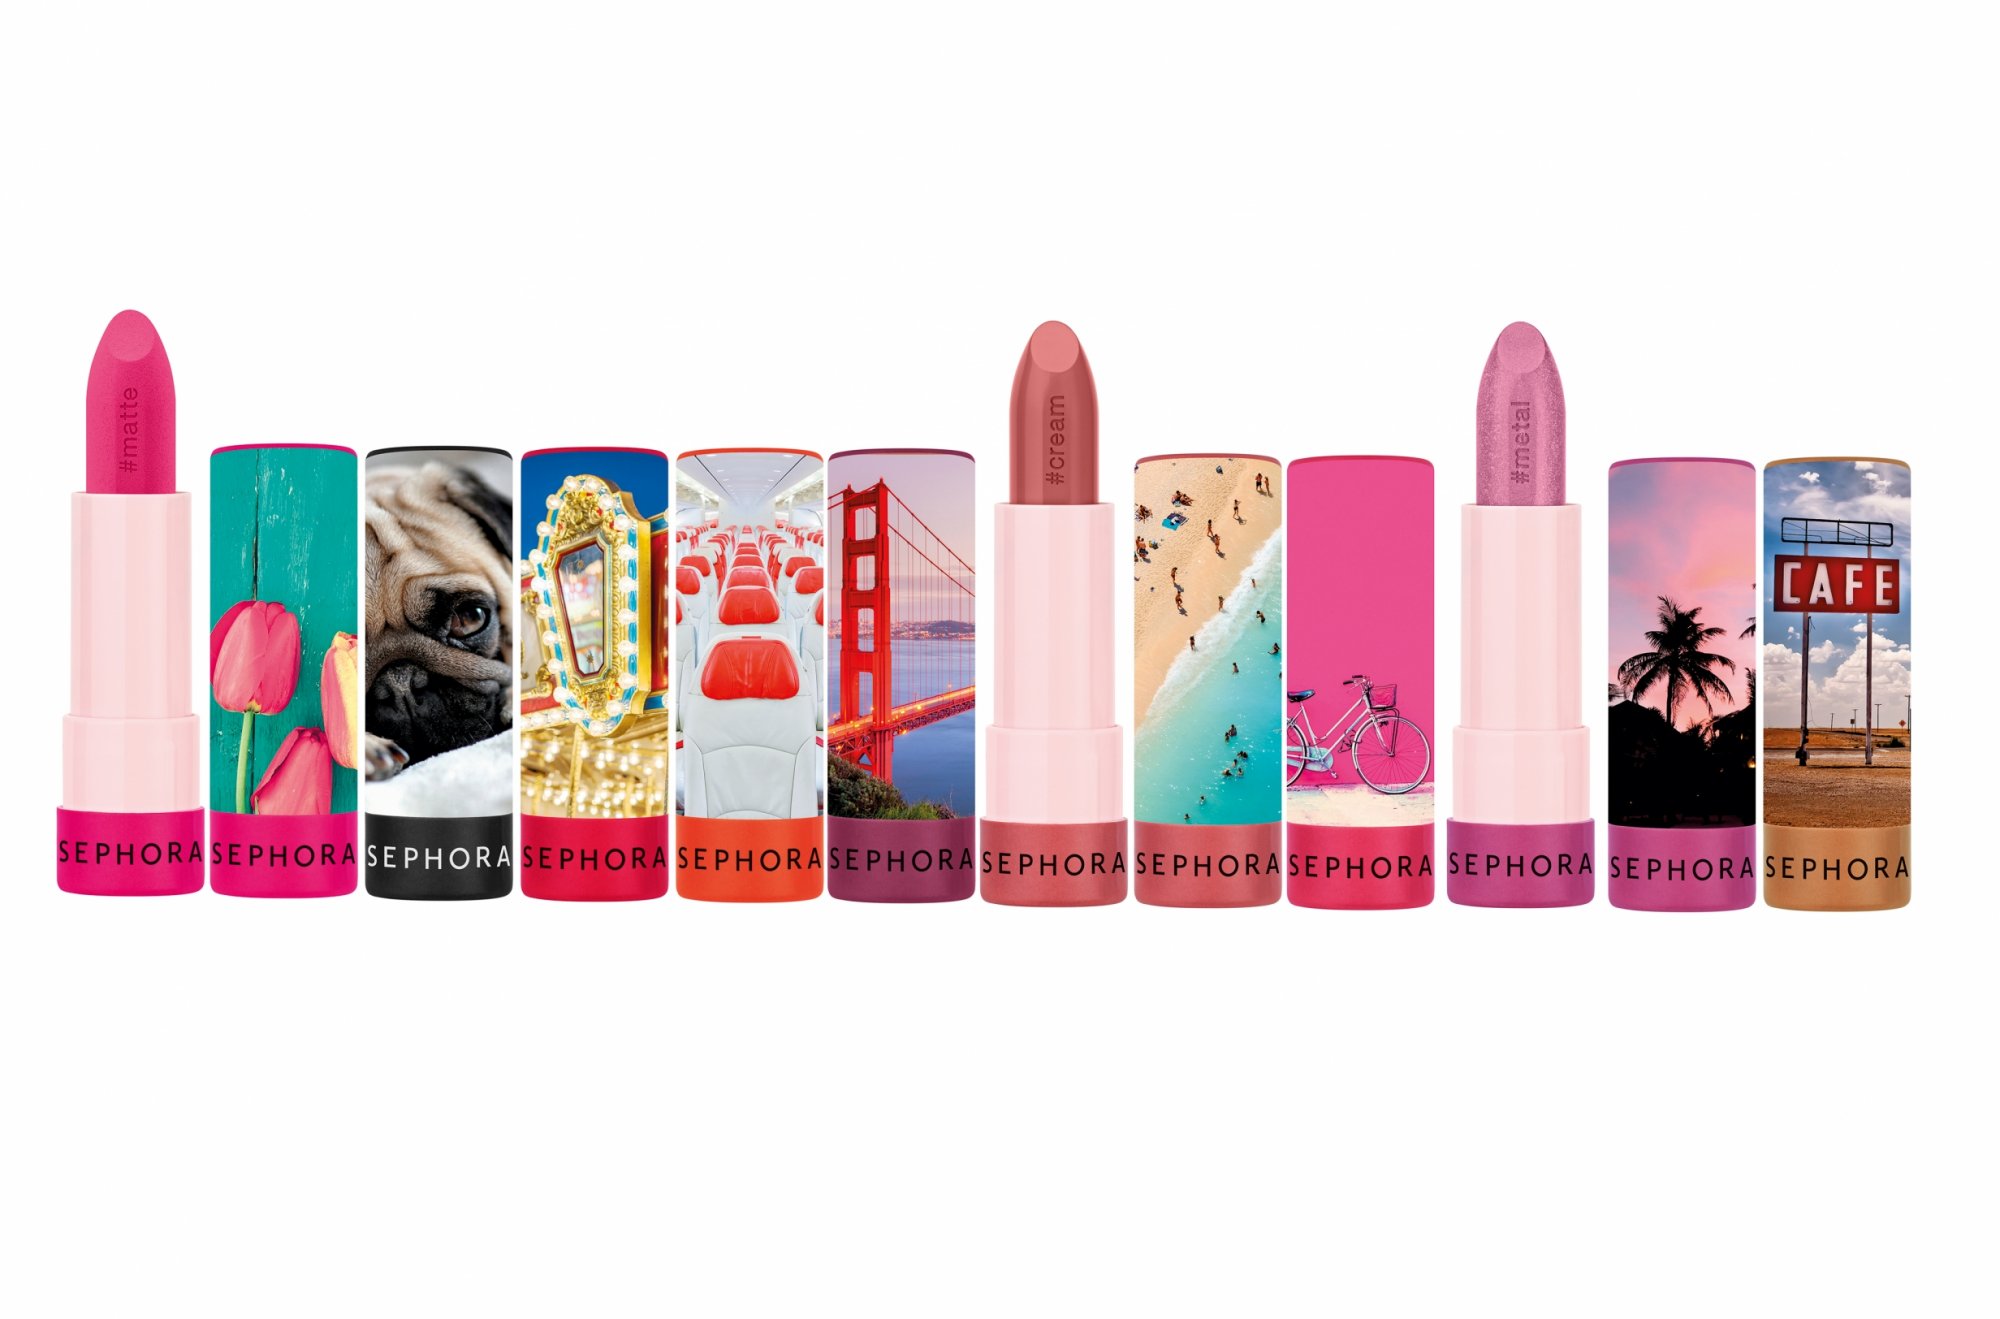 Sephora lipsticks